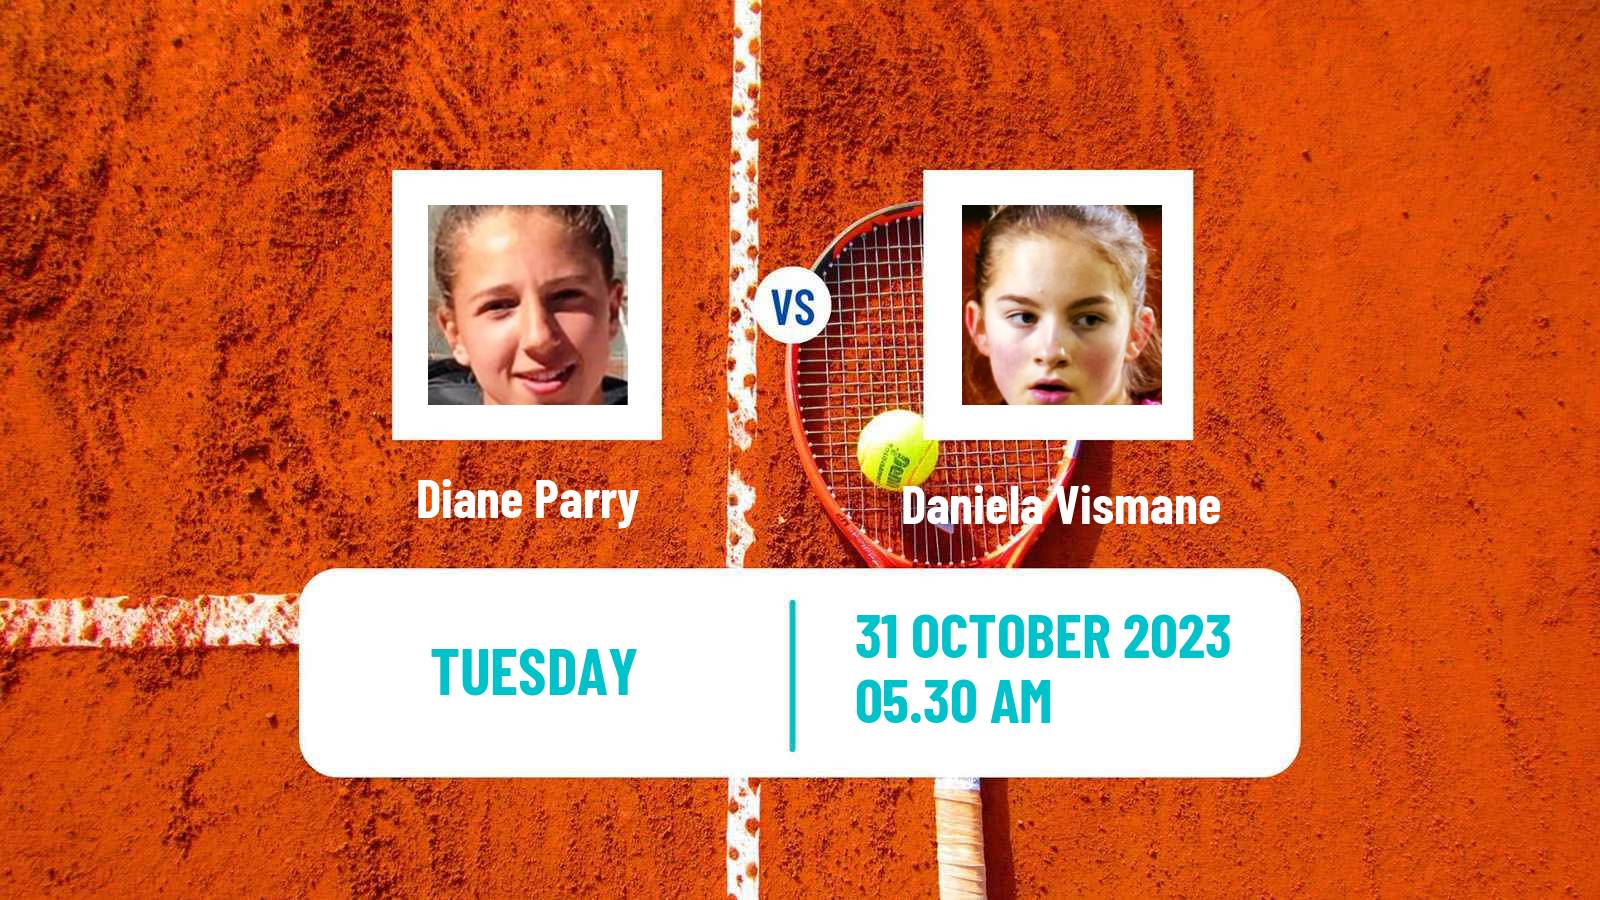 Tennis ITF W40 Heraklion Women Diane Parry - Daniela Vismane